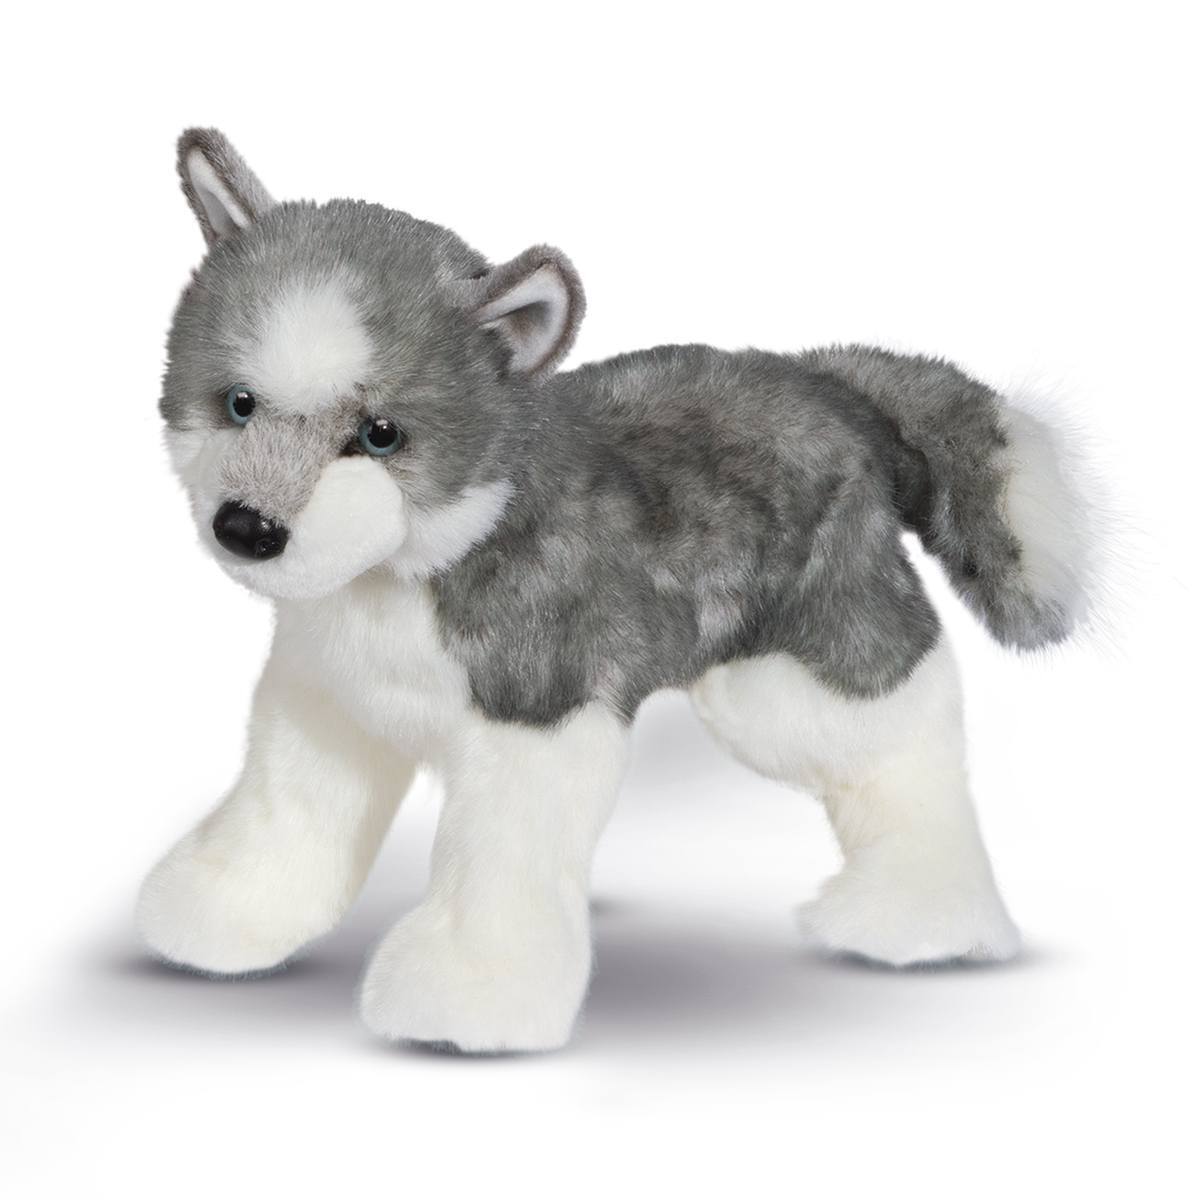 SASHA the Plush HUSKY Dog Stuffed Animal - by Douglas Cuddle Toys - #1803